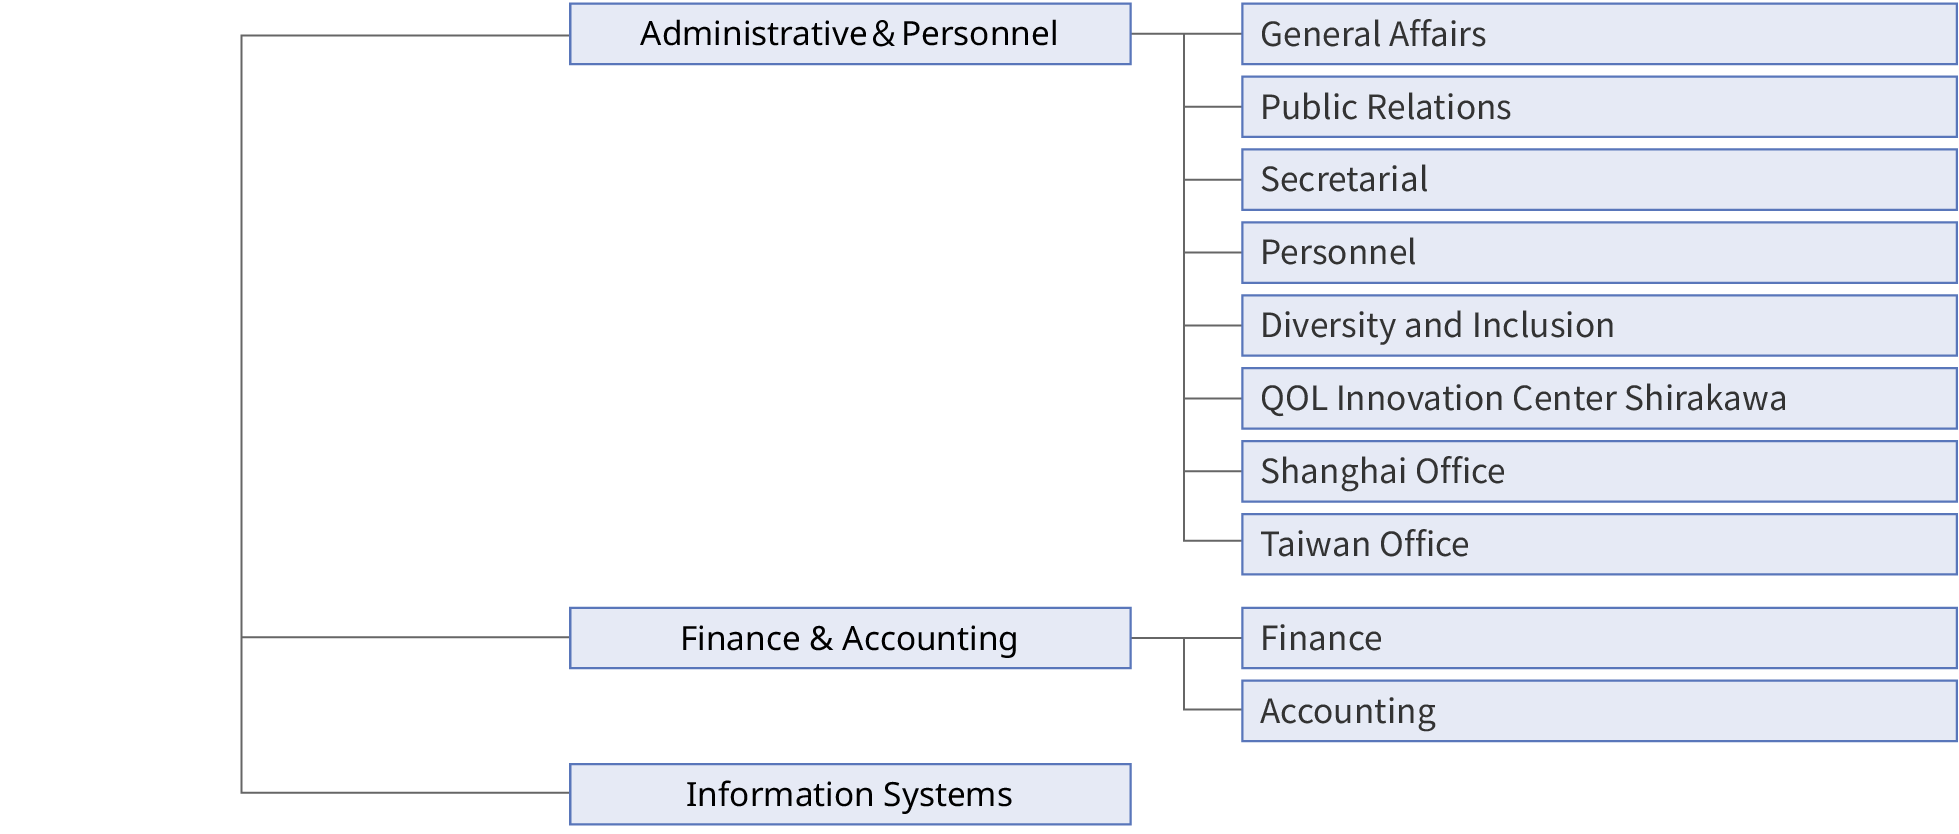 Figure: organization chart 5. it shows administrative & Personnel etc.